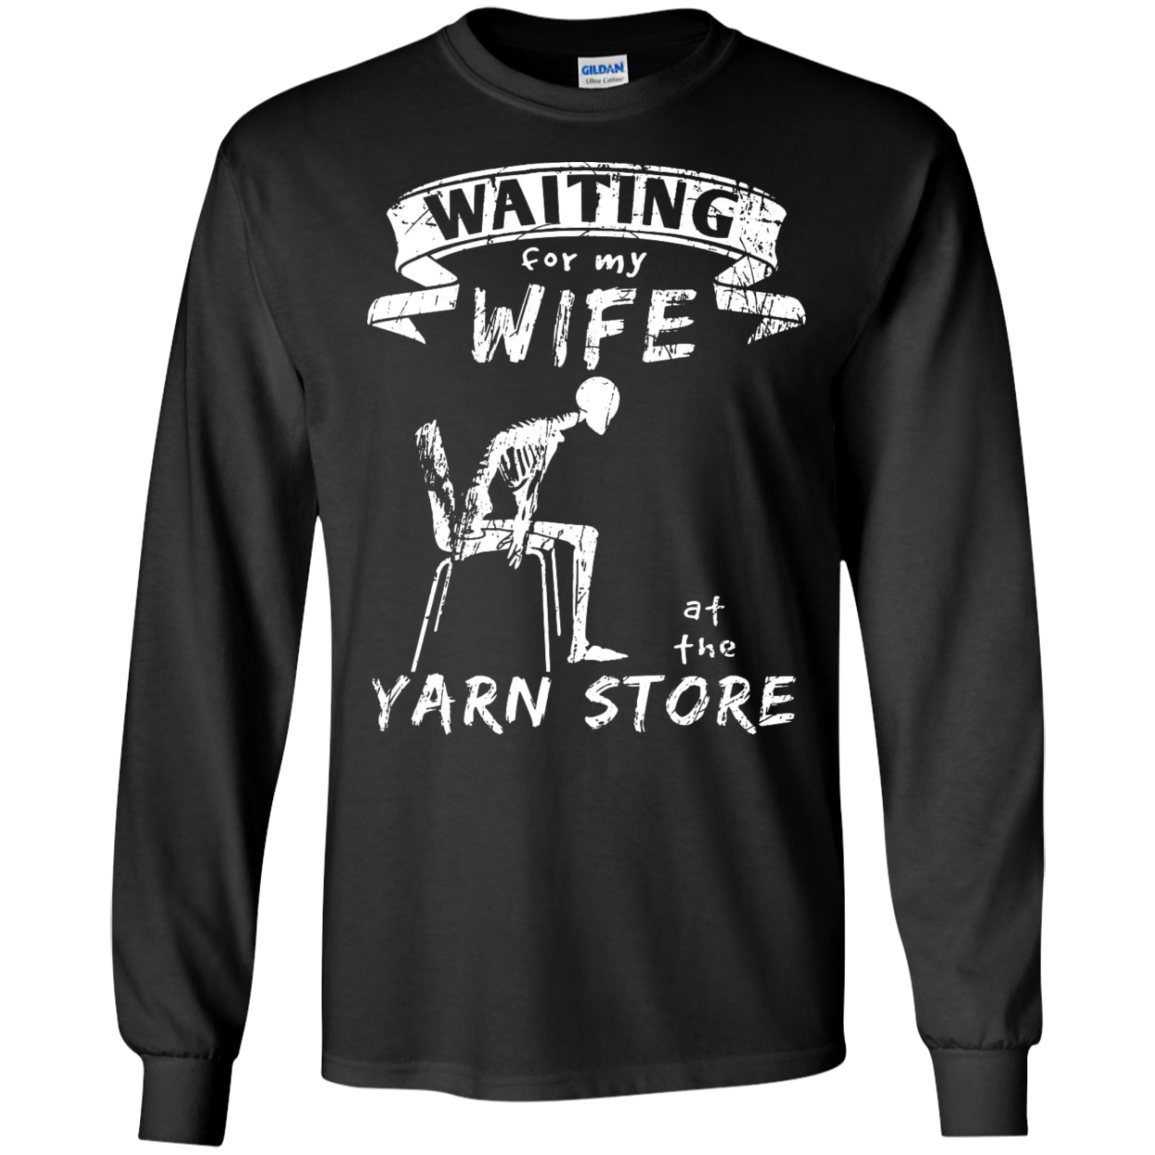 Waiting at the Yarn Store Long Sleeve T-Shirt - Crafter4Life - 2